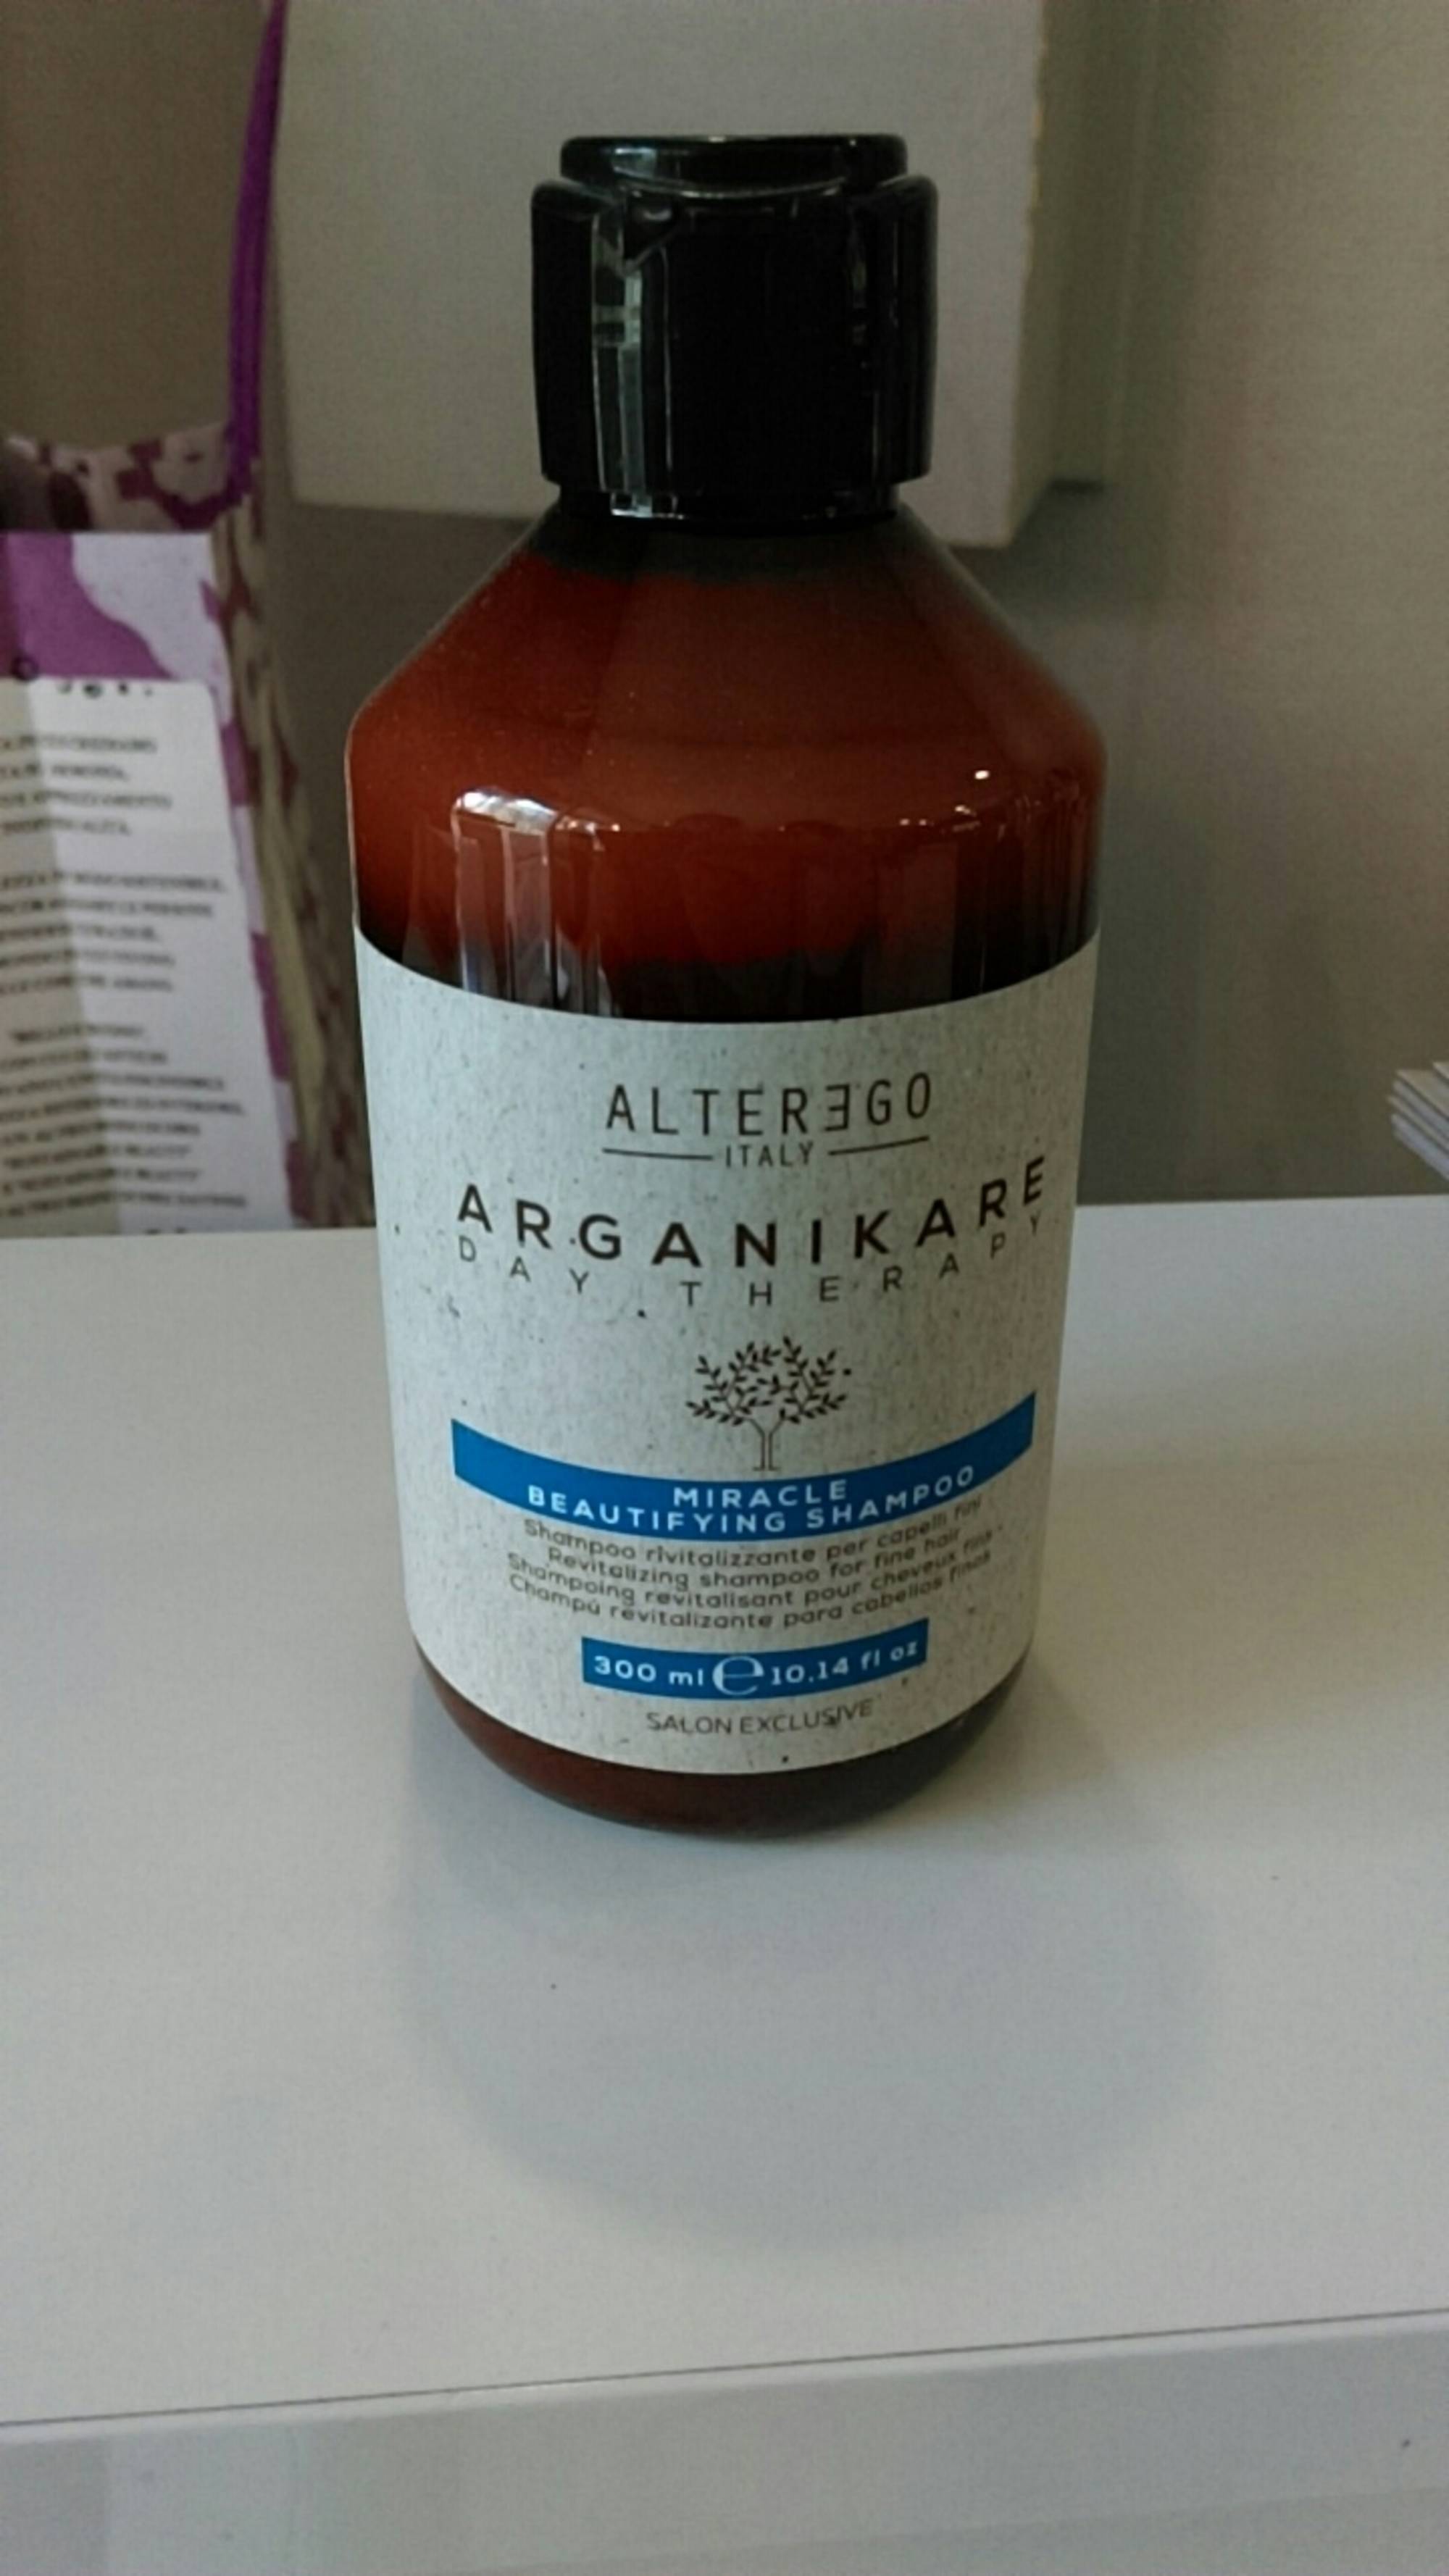 ALTER EGO - Arganikare - Miracle beautifying shampoo